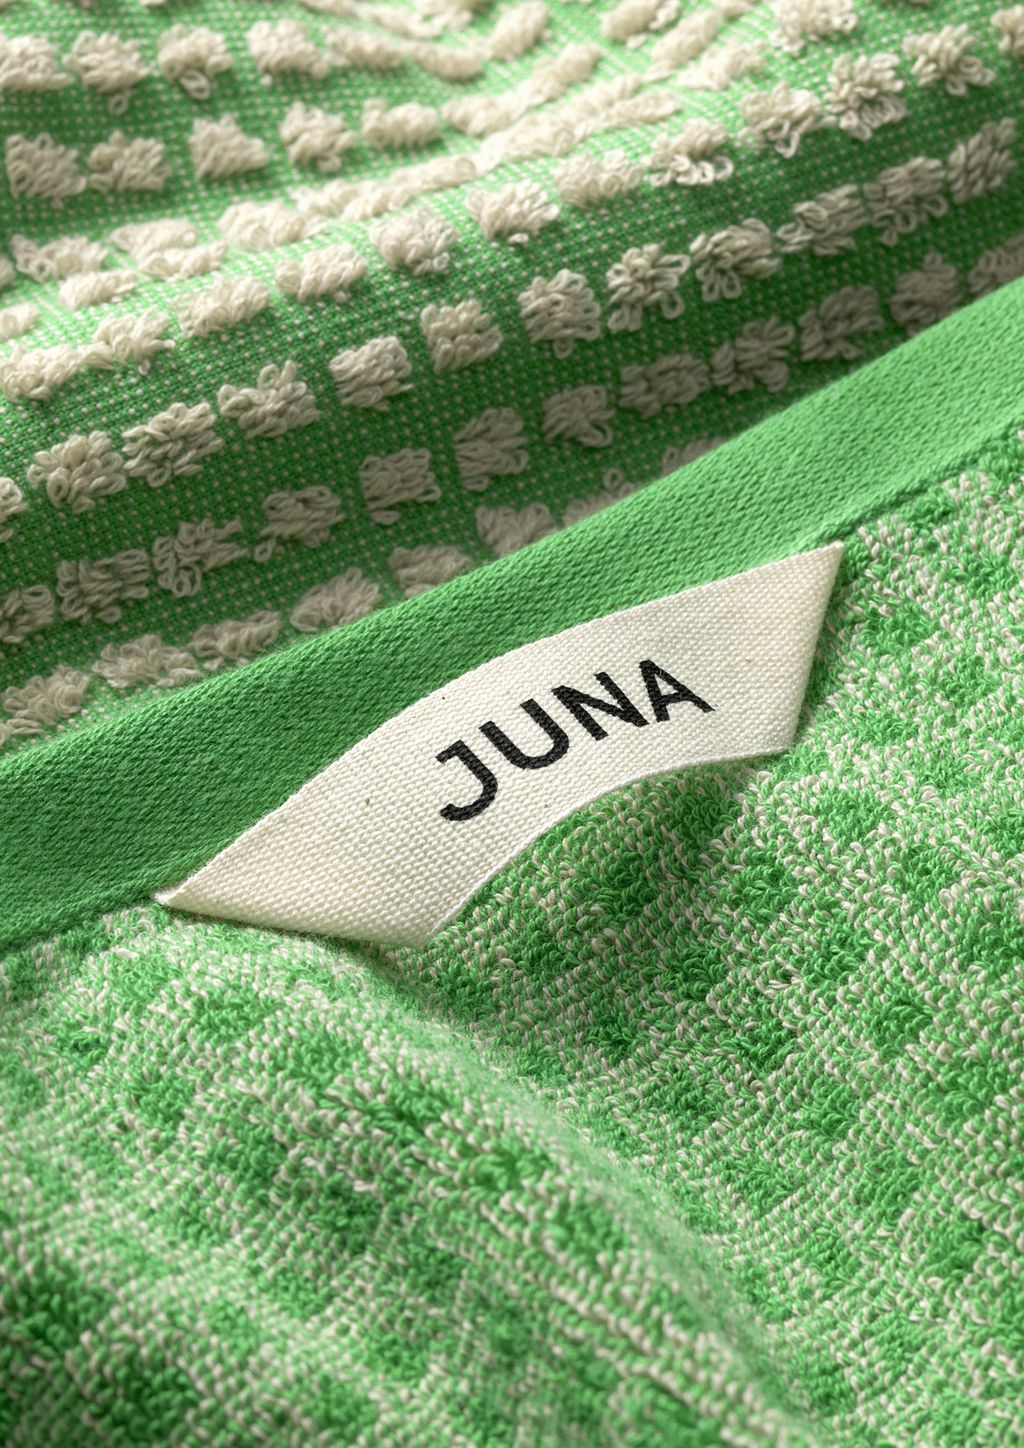 Juna Check Towel 70 X140 Cm, Green/Beige